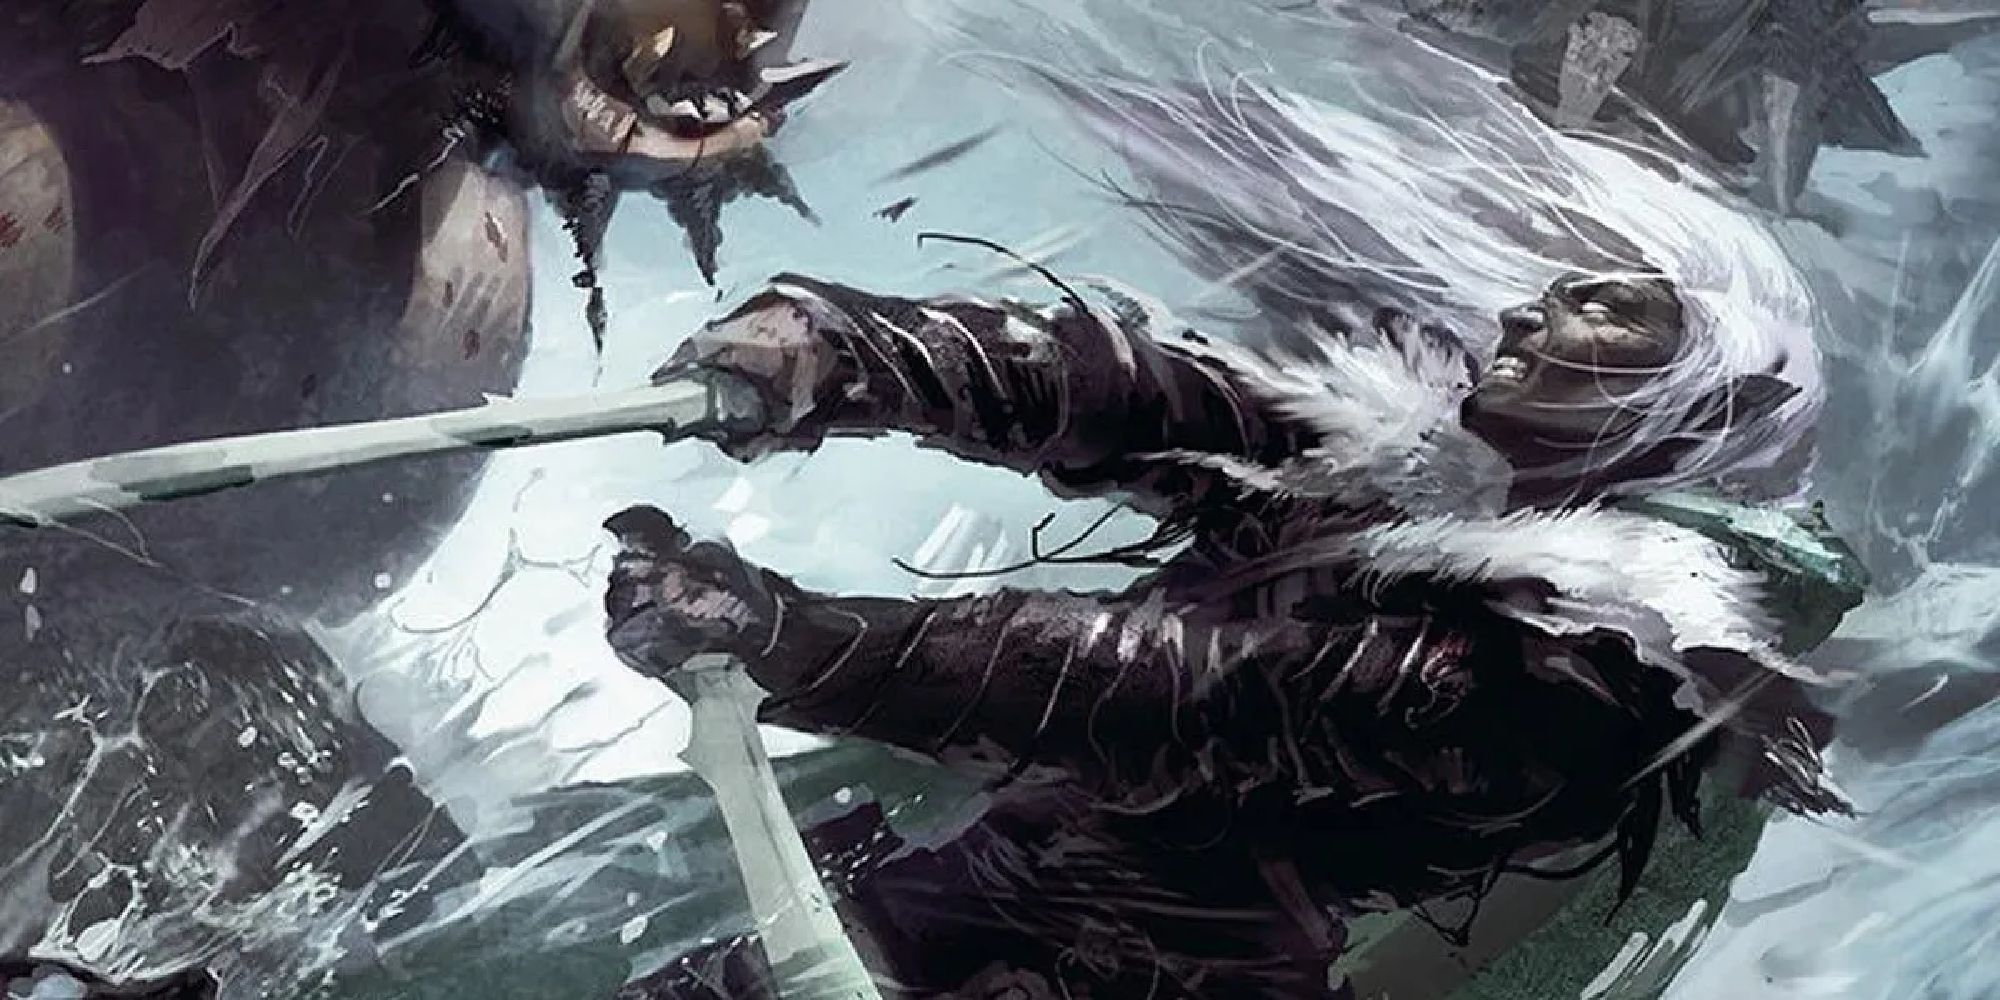 Drizzt Do’Urden dual-wielding scimitars against a monster in a snow-swept region.